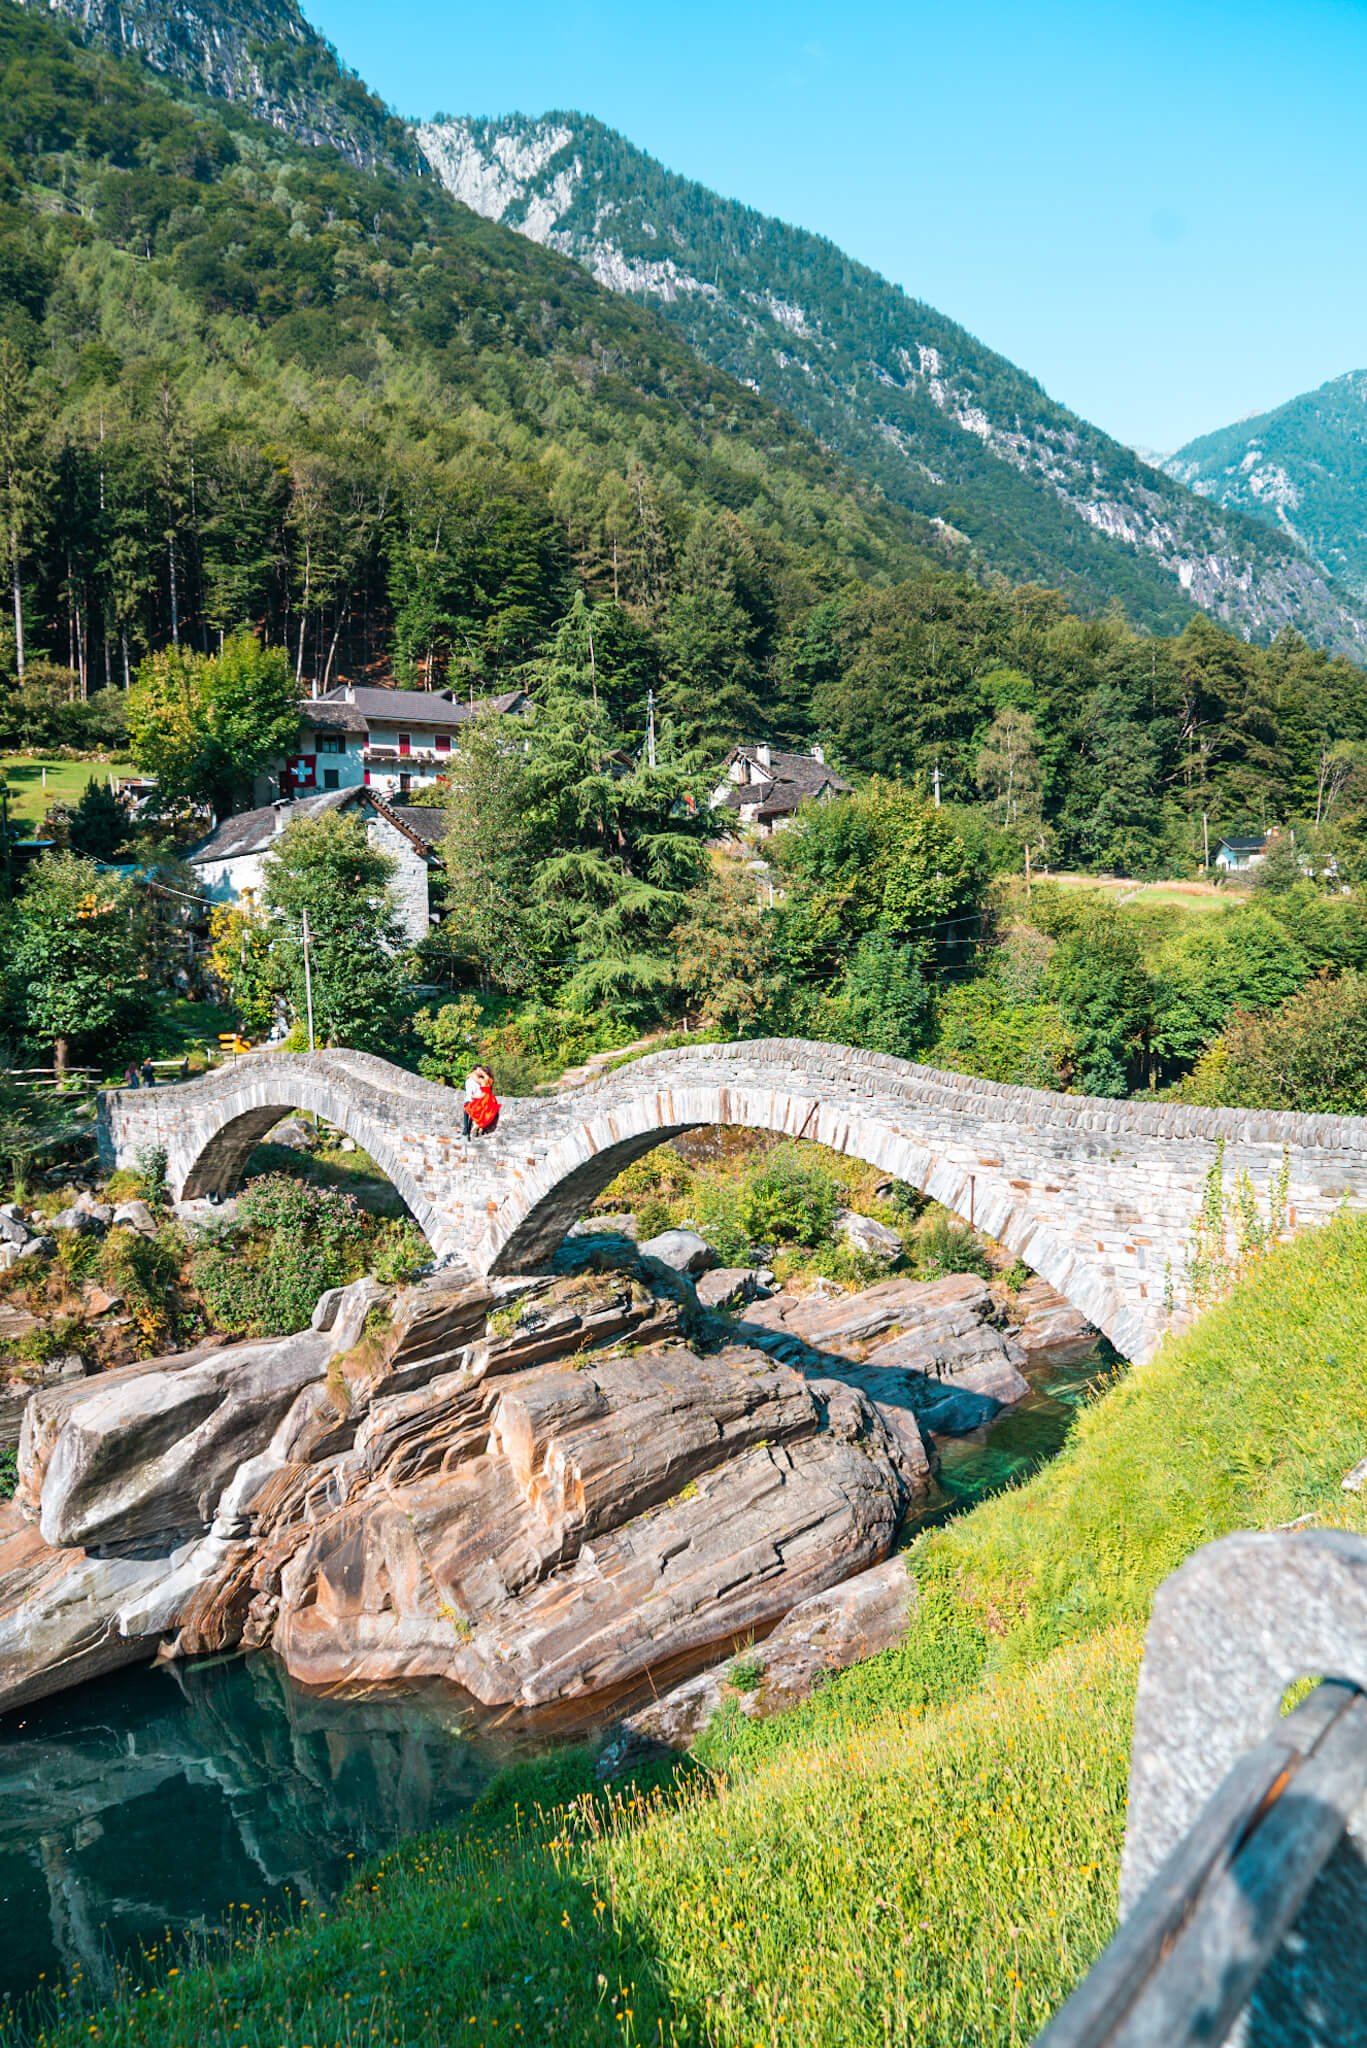 Ticino, Switzerland travel guide reocmmendations